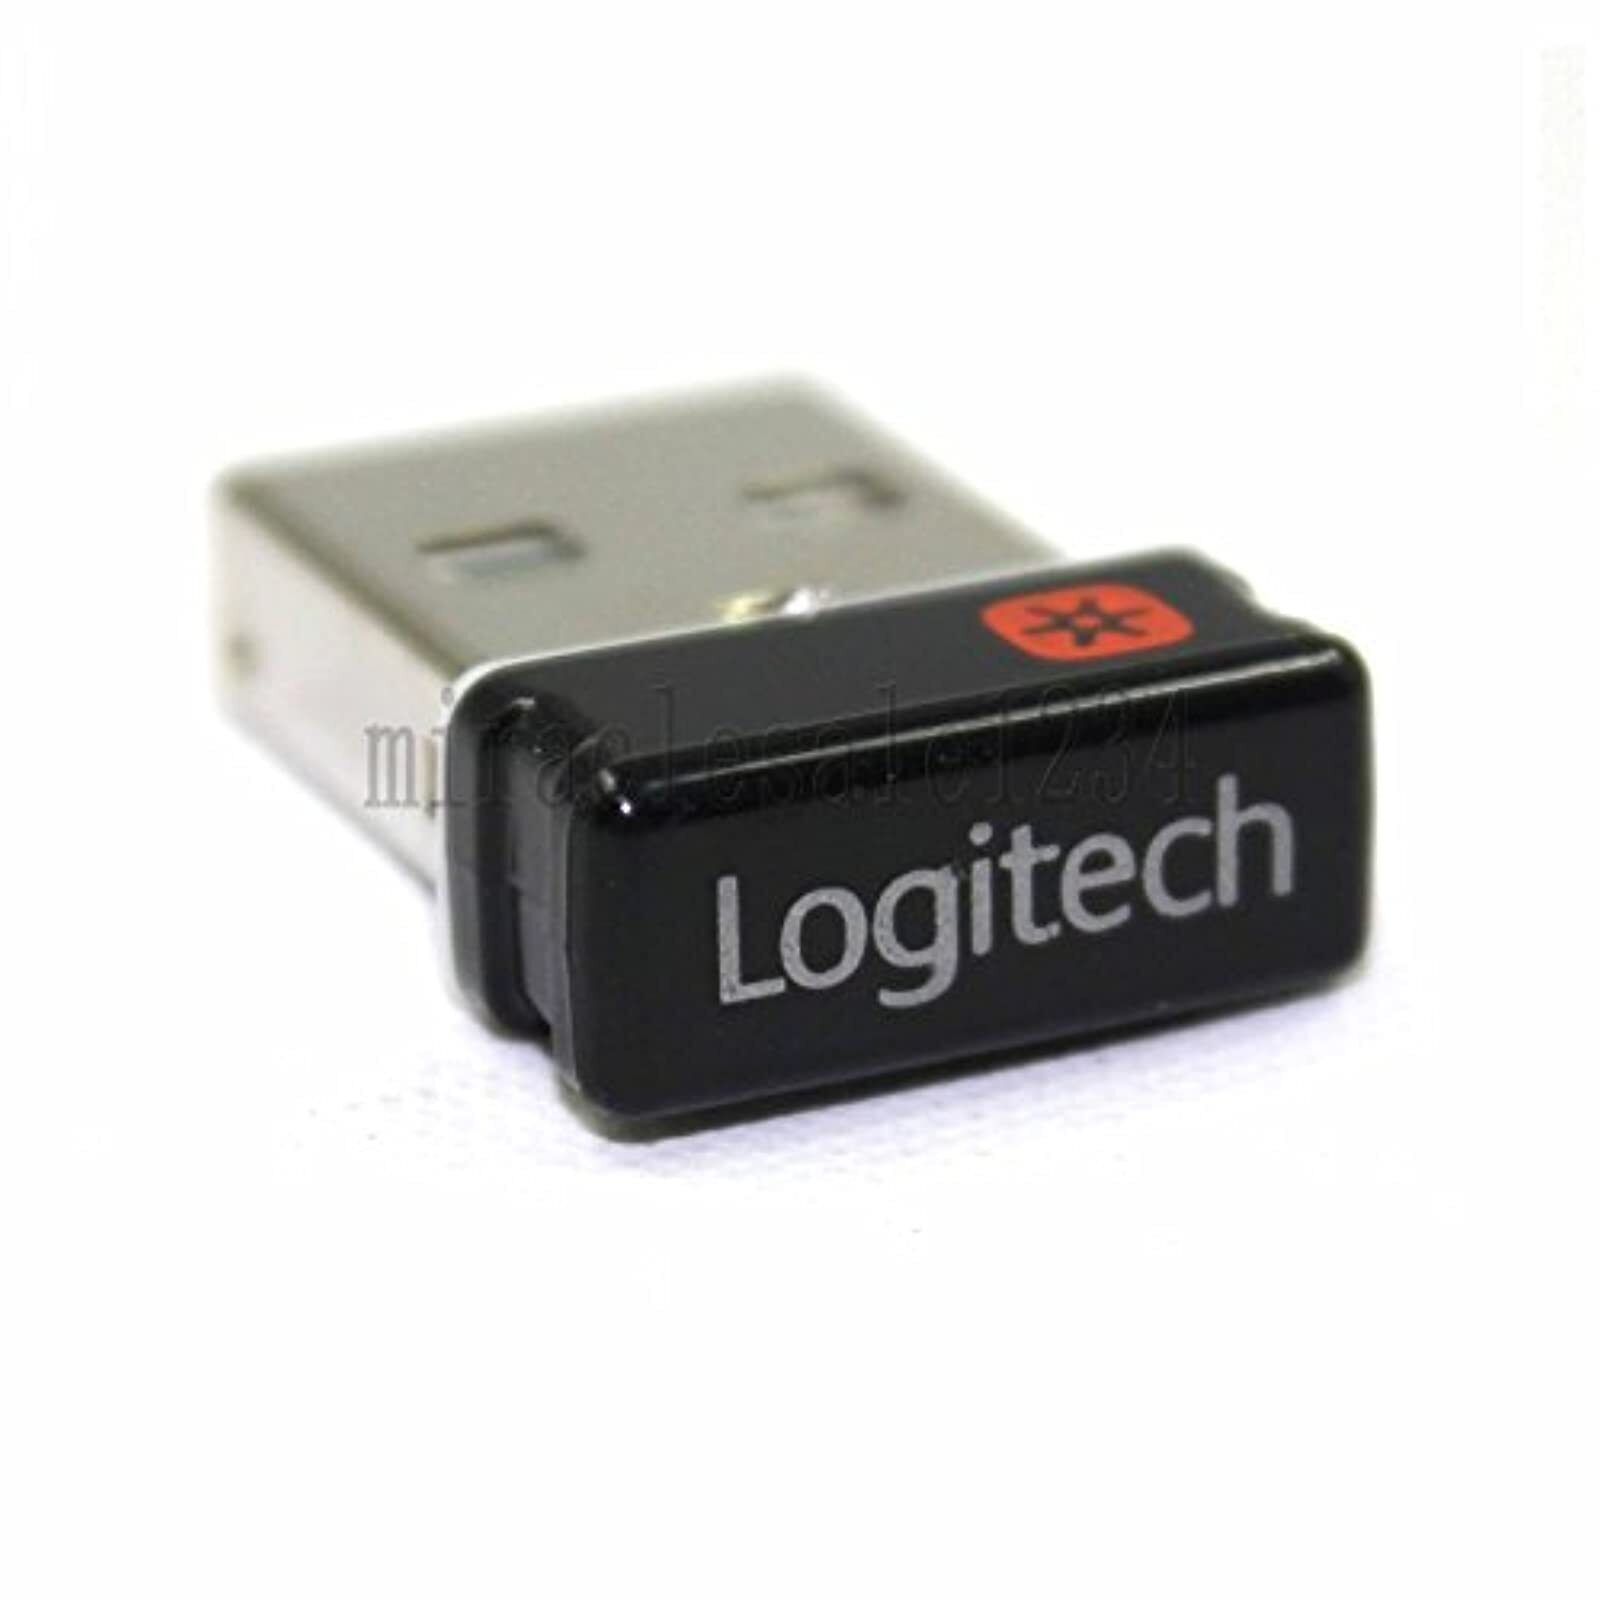 Genuine Logitech Unifying Receiver For M325 M315 M515 M570 M510 M705 M950